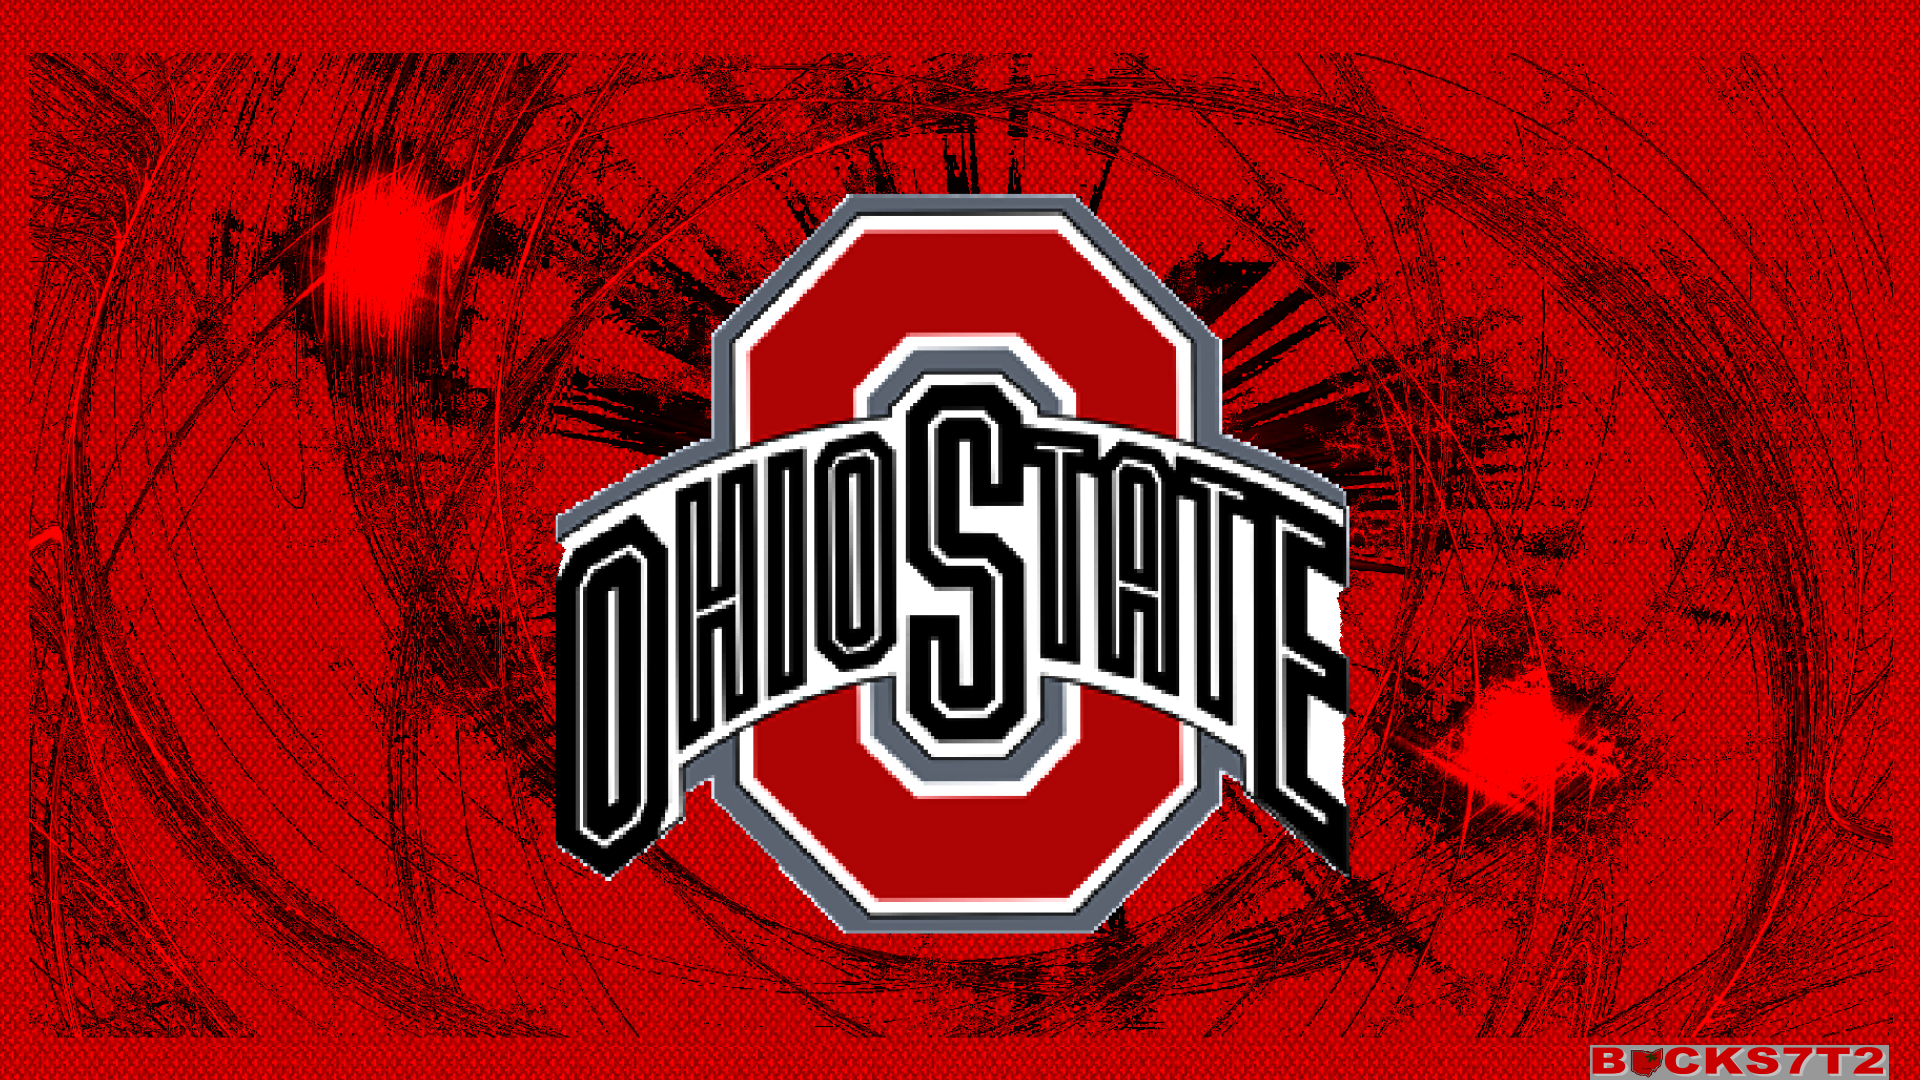 Red Block O Ohio State University Basketball